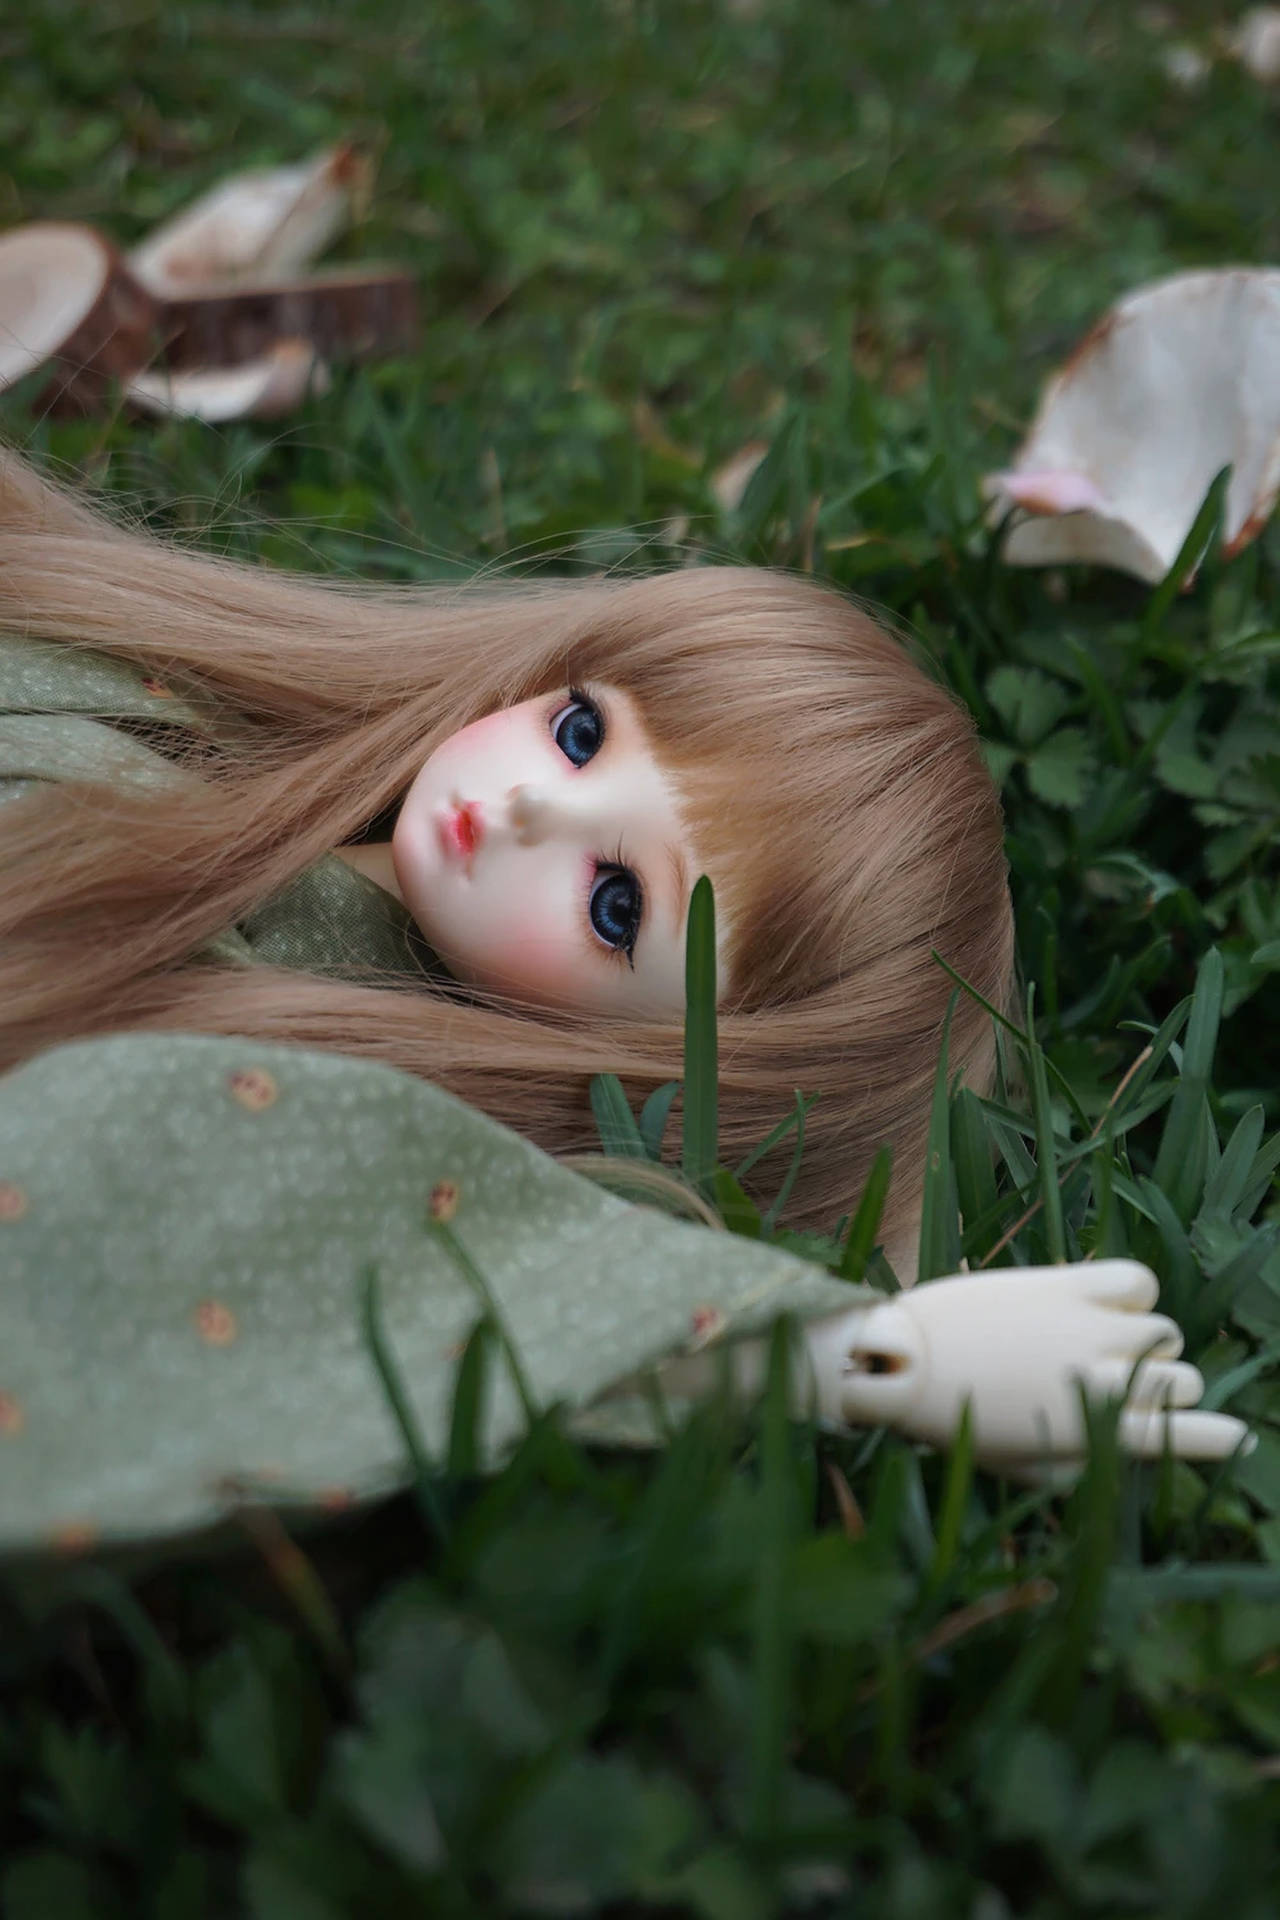 Cute Doll On Grass